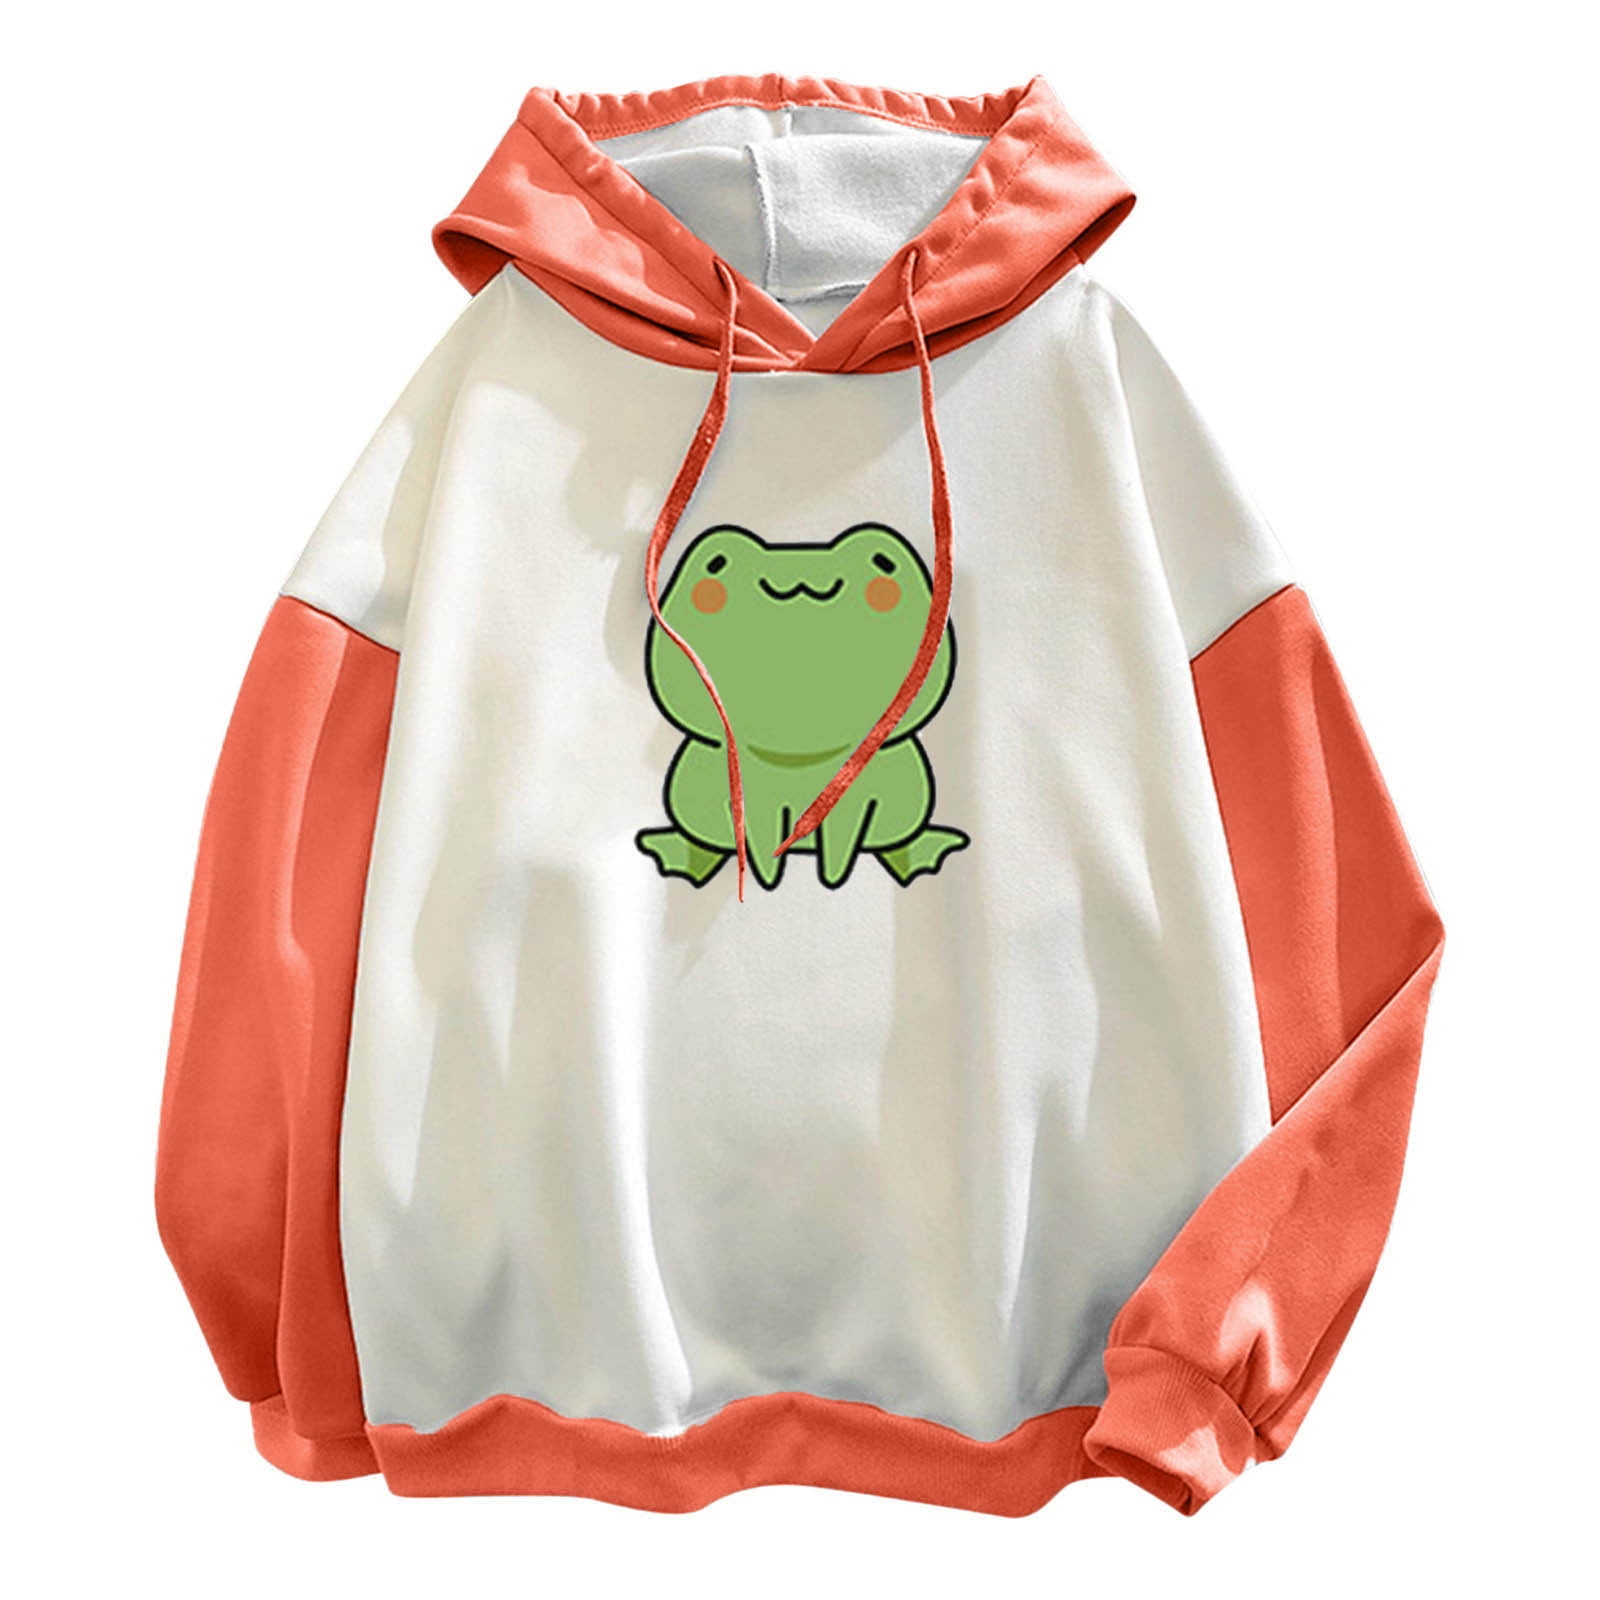 Replio Cute Hoodies for Women Teen Girls Frog Zipper Mouth Long Sleeve  Hooded Sweatshirt Pullover Fall Top Graphic Shirt, B46-beige, Medium :  : Clothing, Shoes & Accessories